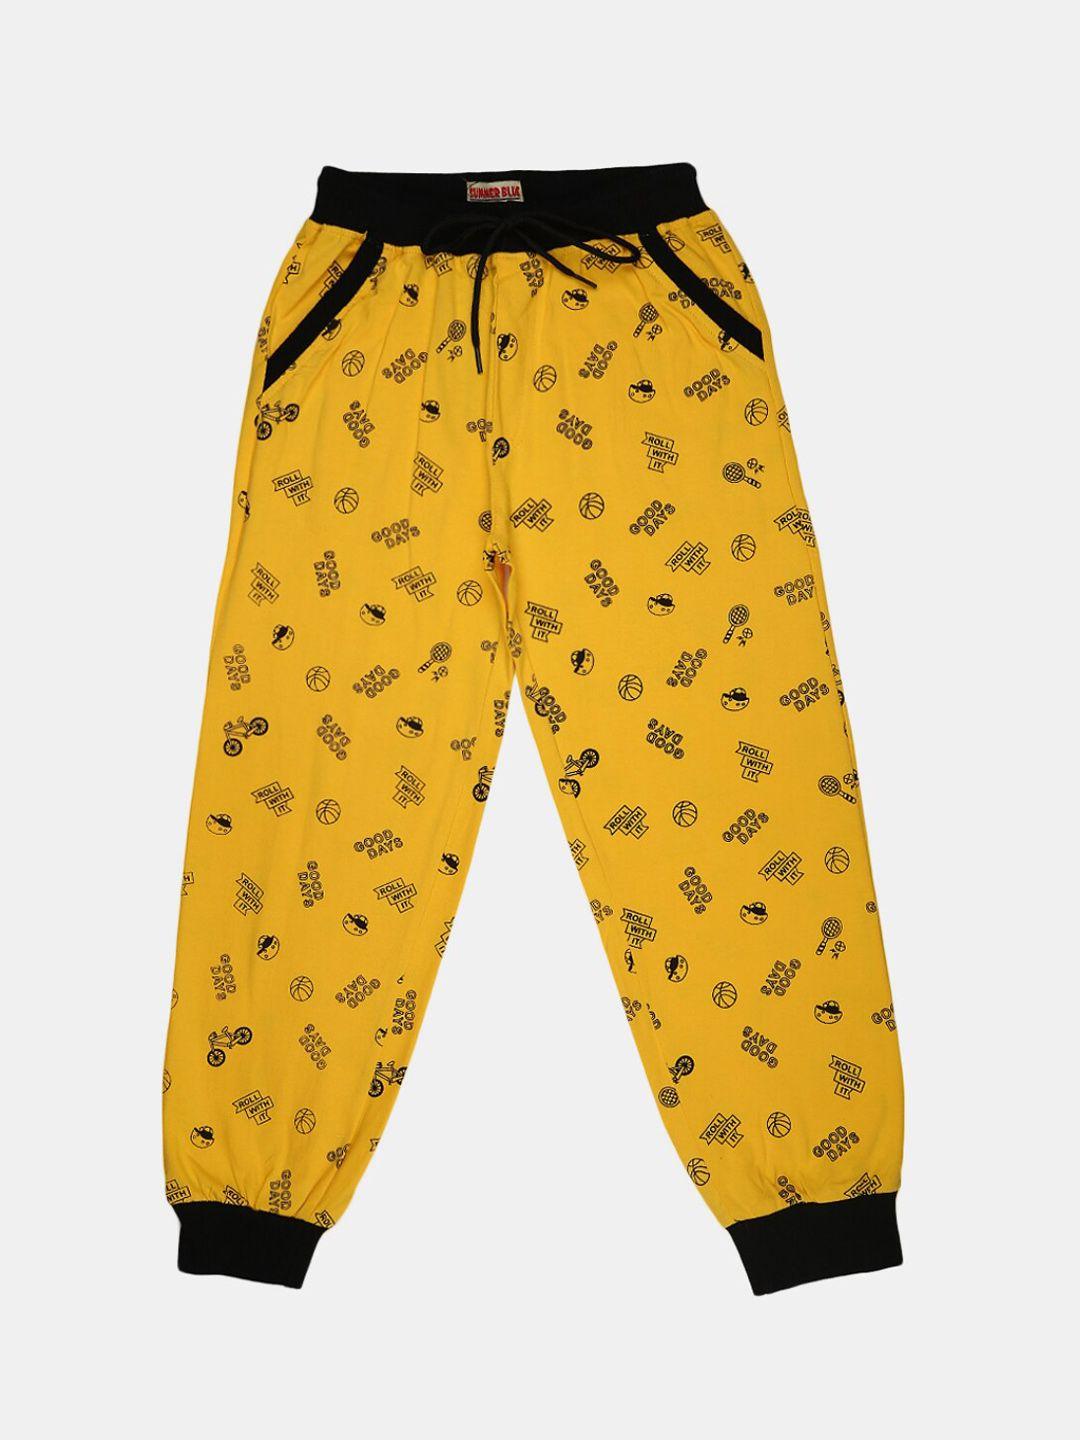 v-mart boys yellow & black printed cotton single joggers